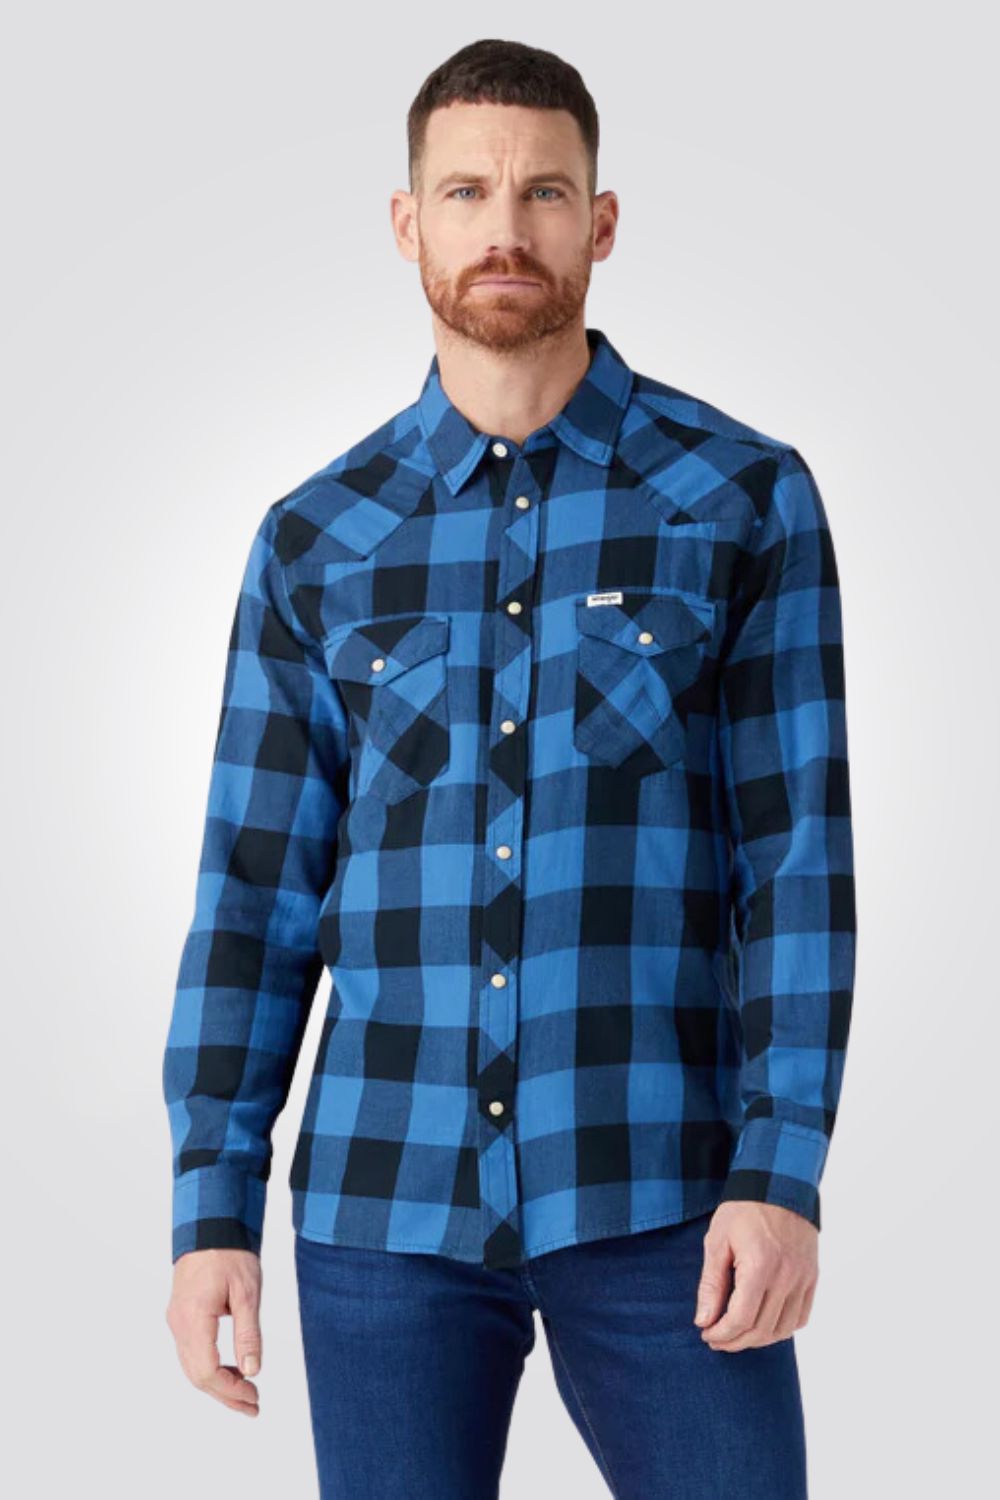 WRANGLER - חולצה מכופתרת משבצות בצבע כחול ושחור - MASHBIR//365